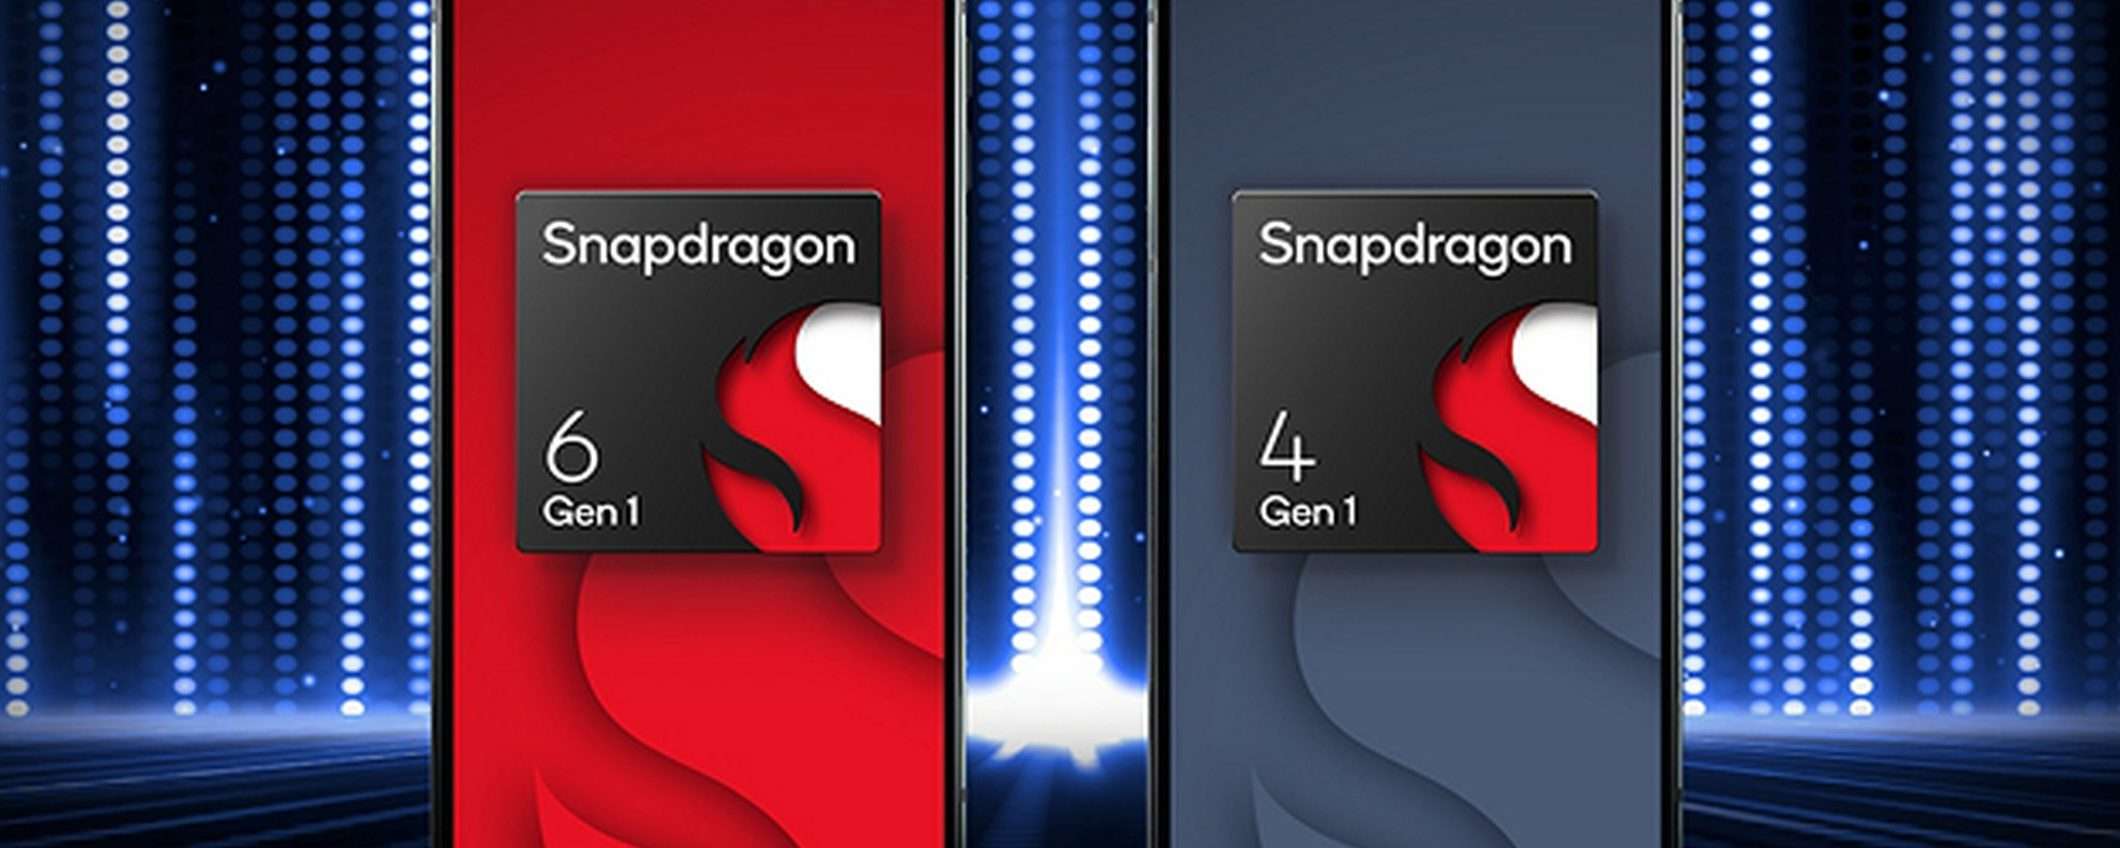 Qualcomm annuncia Snapdragon 6 e 4 Gen 1